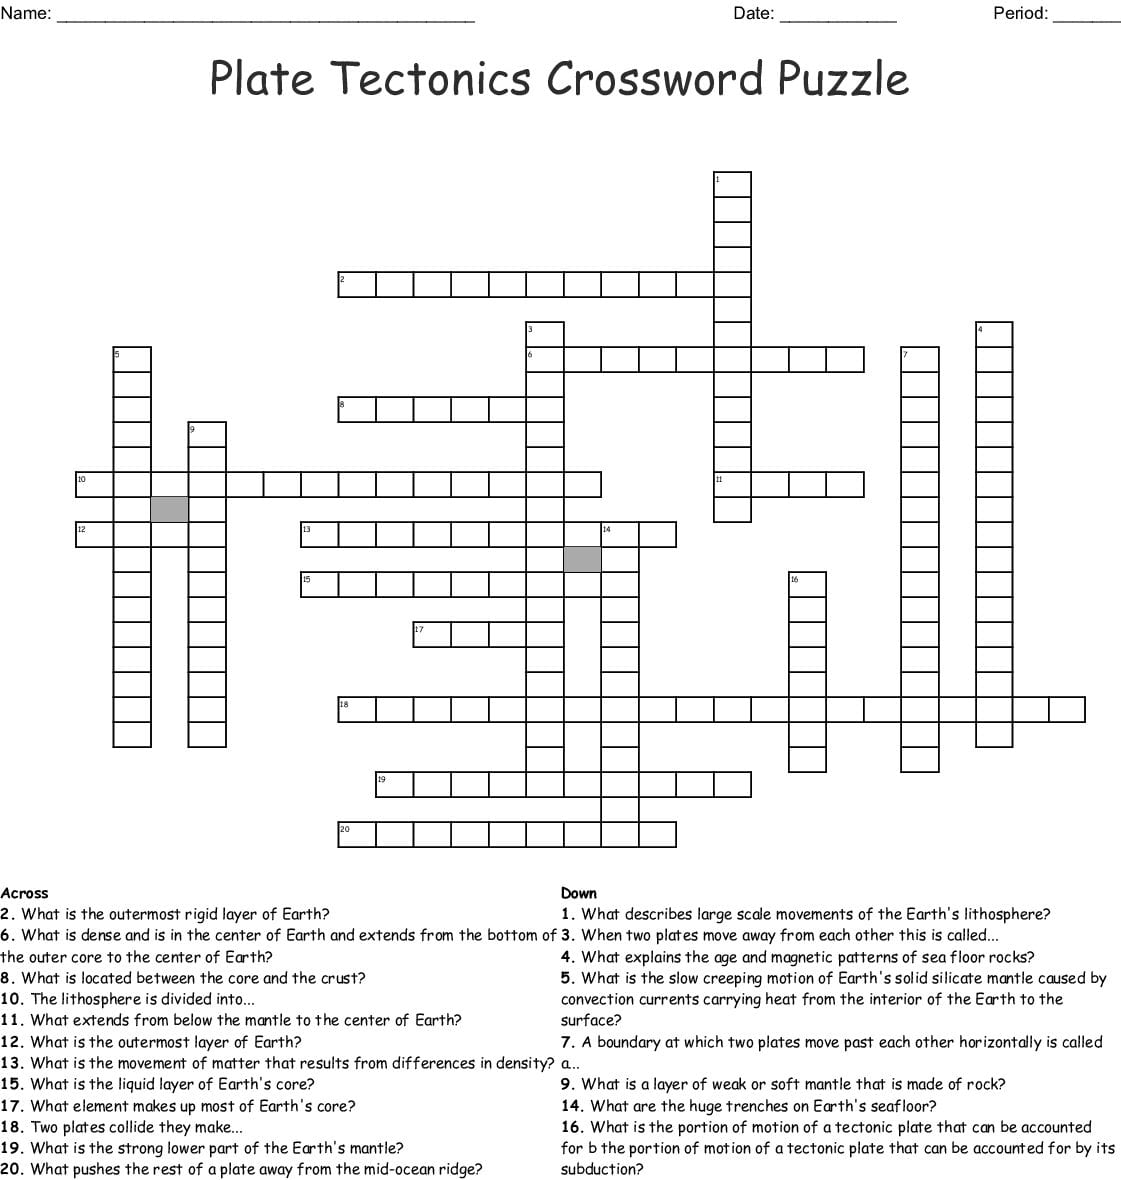 Plate Tectonics Crossword Puzzle  Word